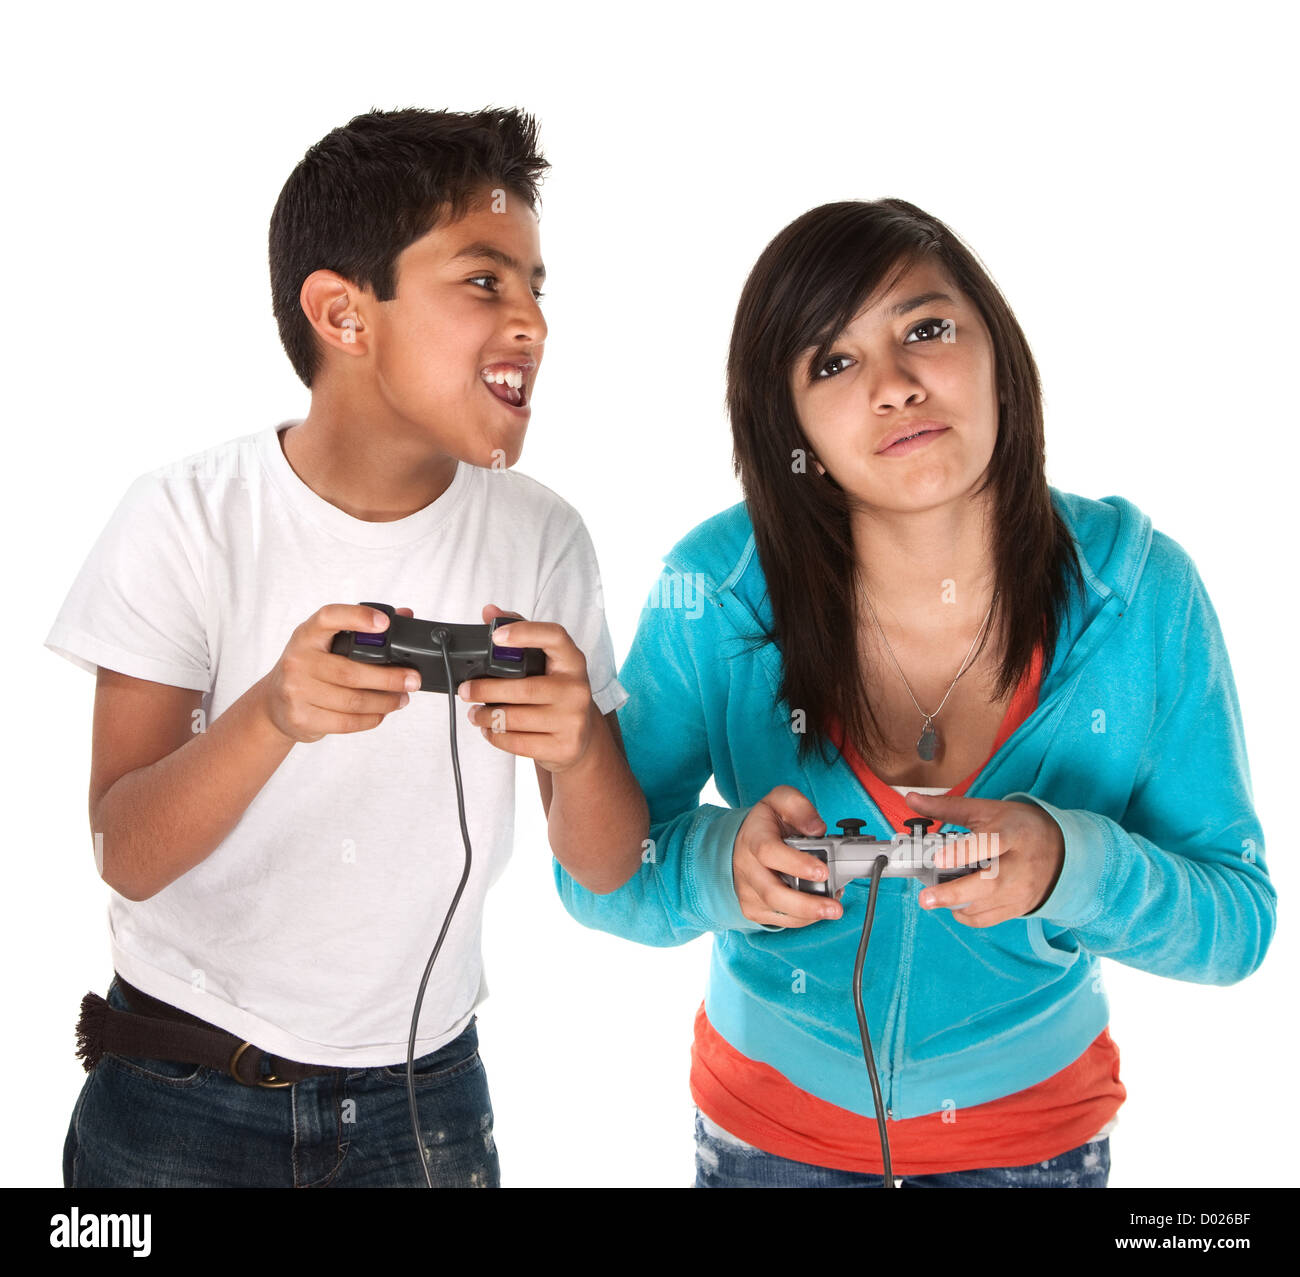 Two young cute Hispanic kids playing video games Stock Photo